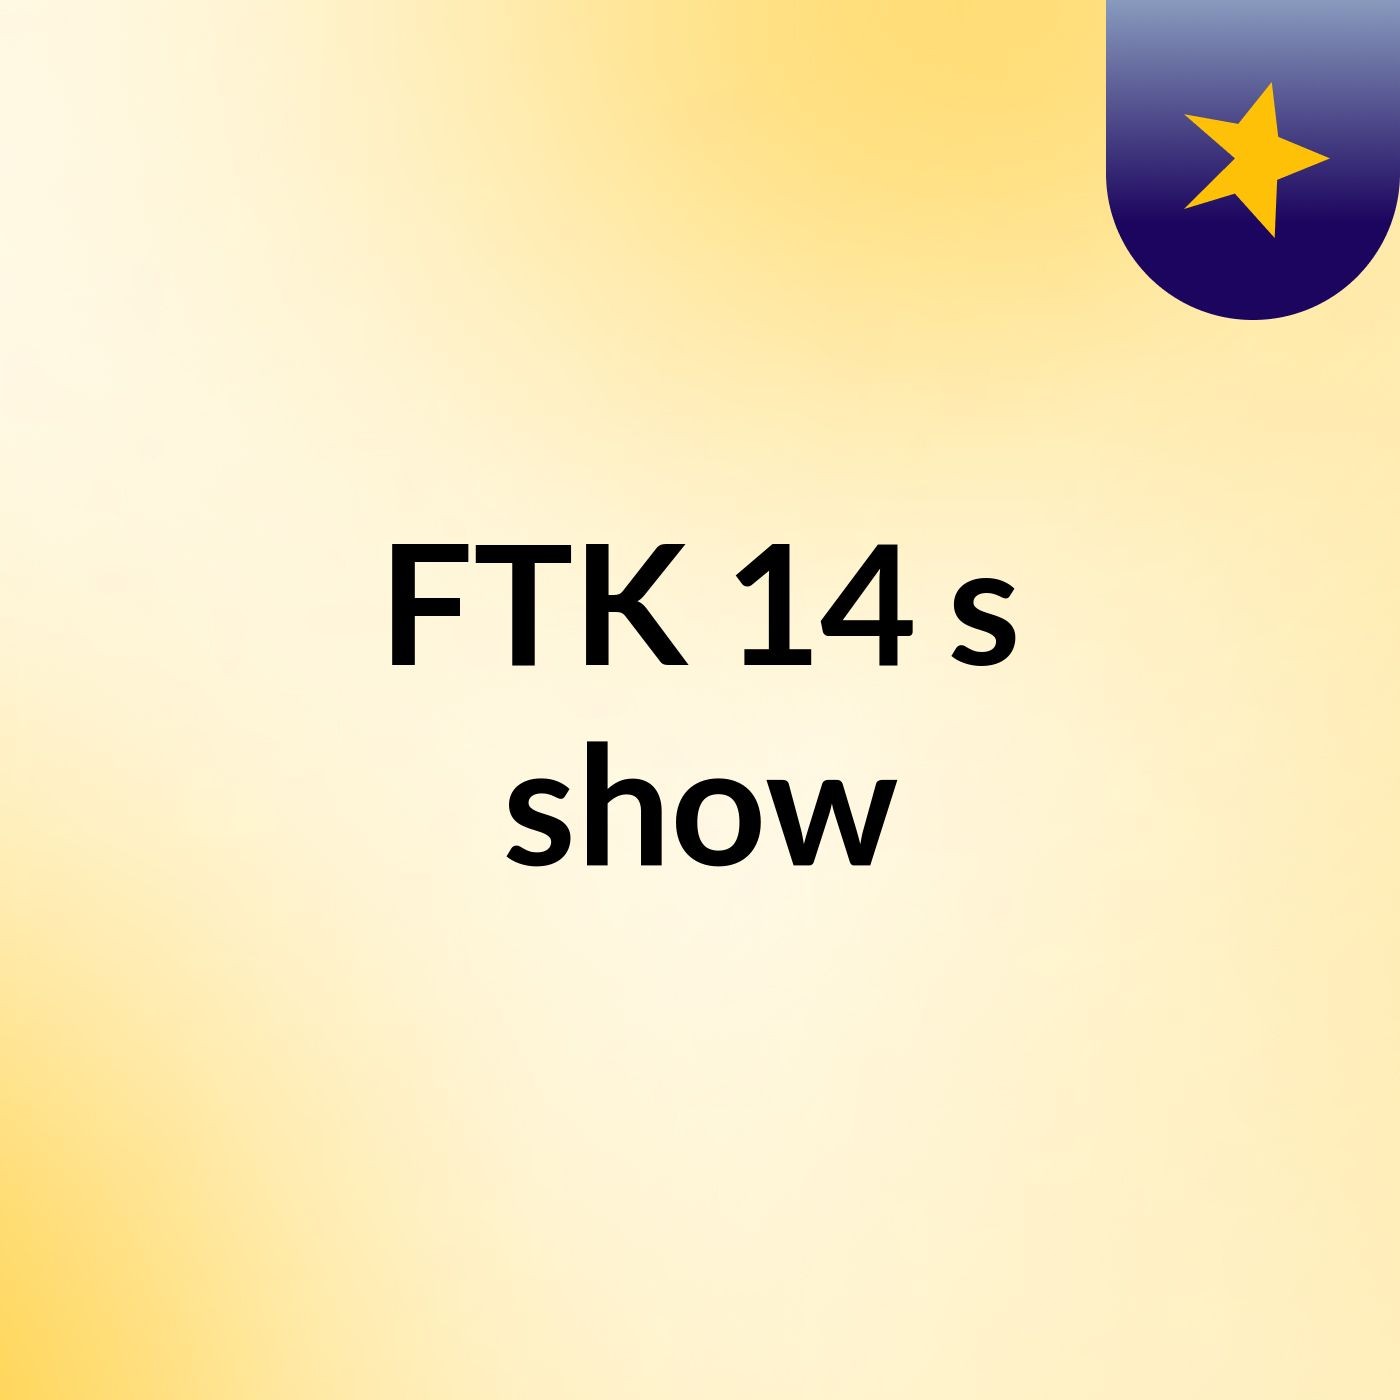 FTK 14's show